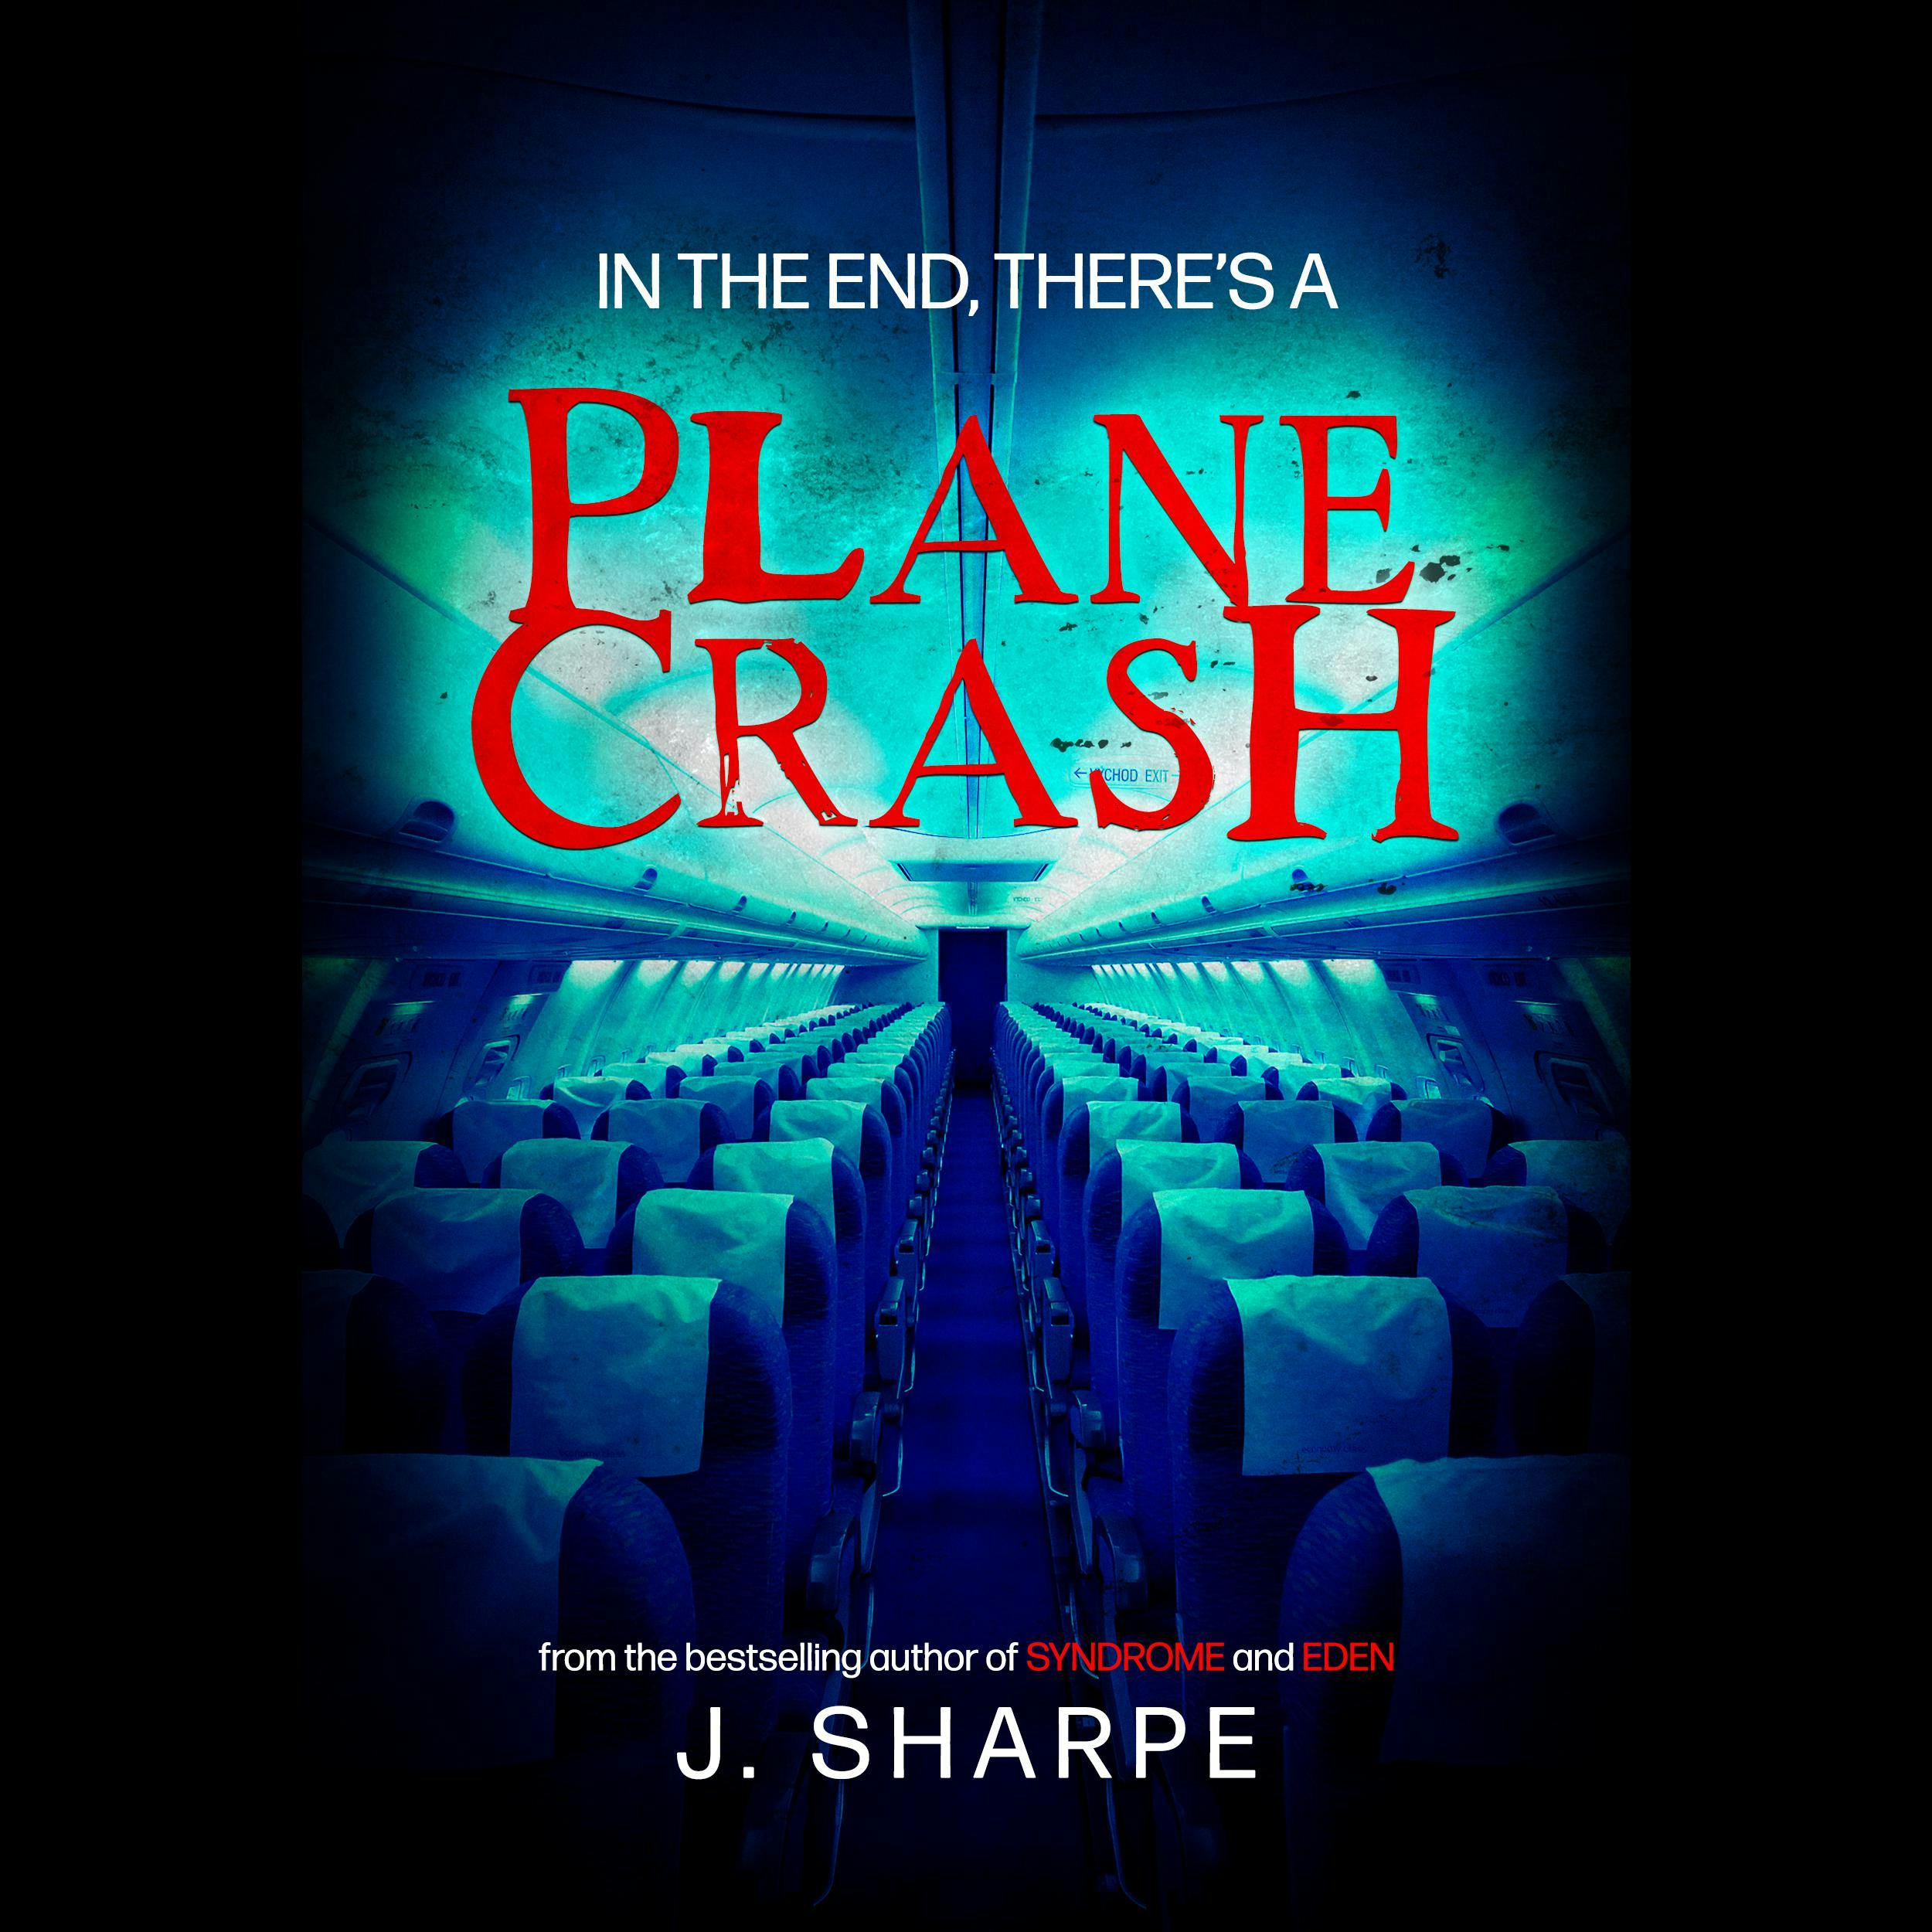 In the end, there's a plane crash: A Suspenseful Horror - J. Sharpe